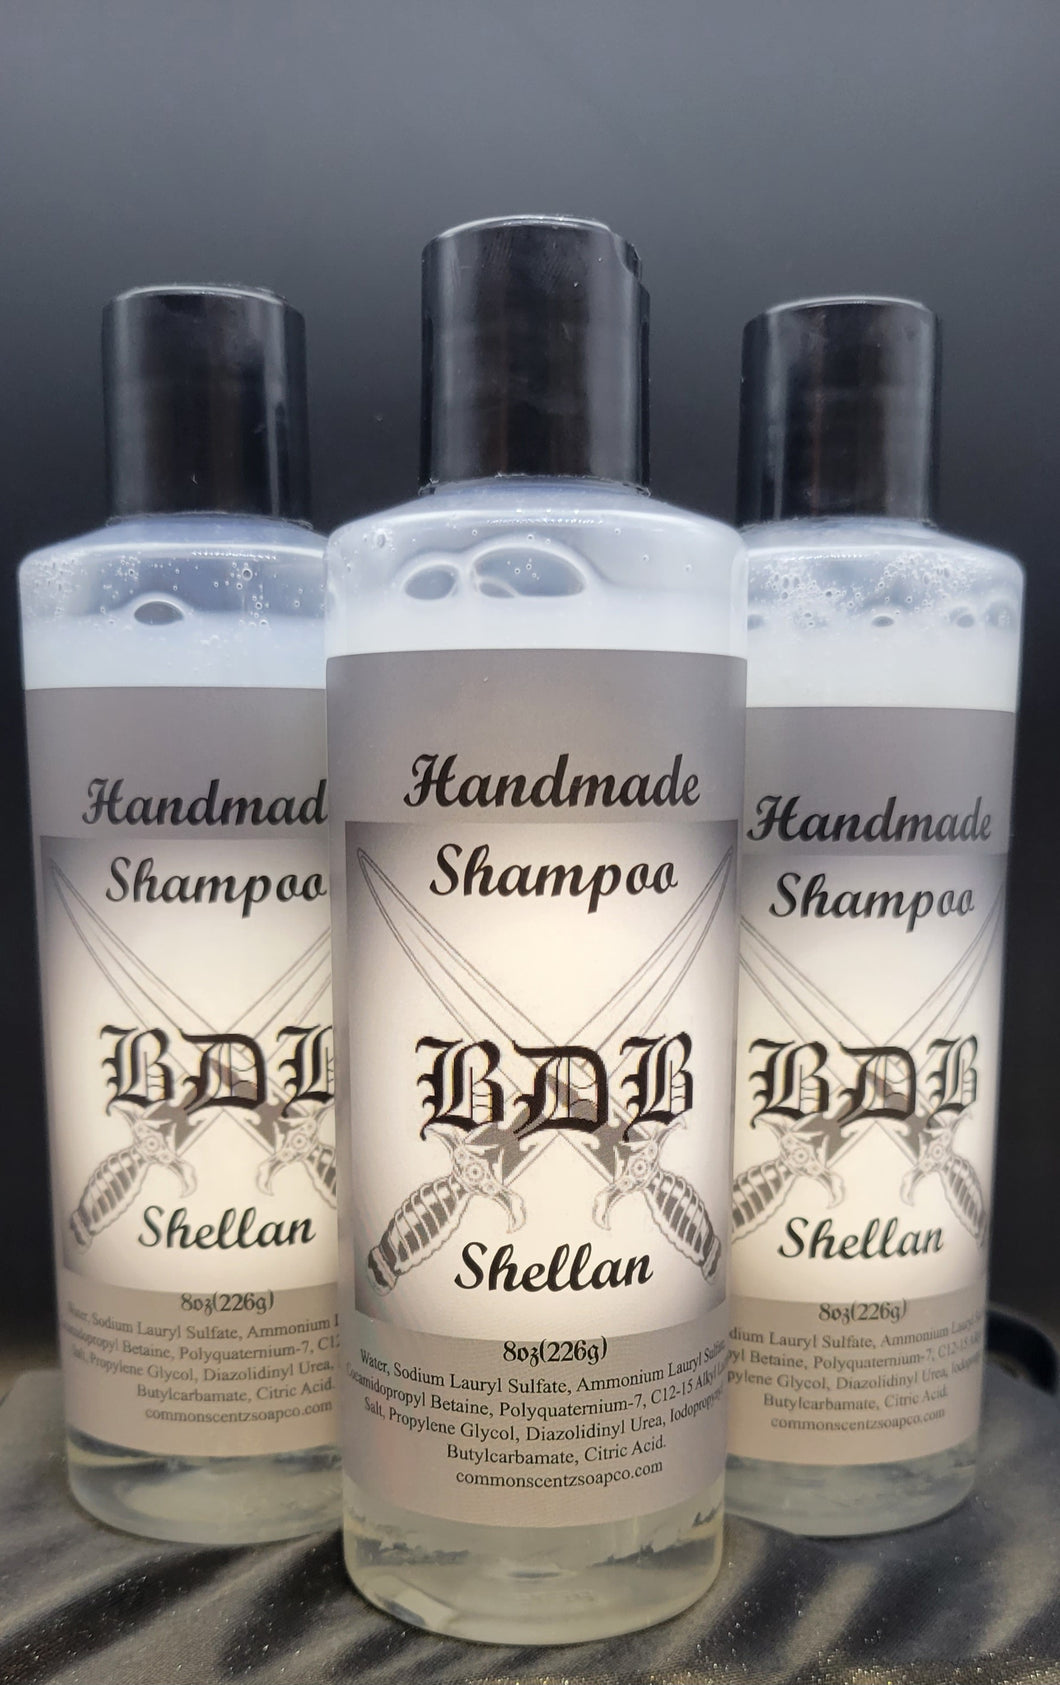 Shellan Handmade shampoo